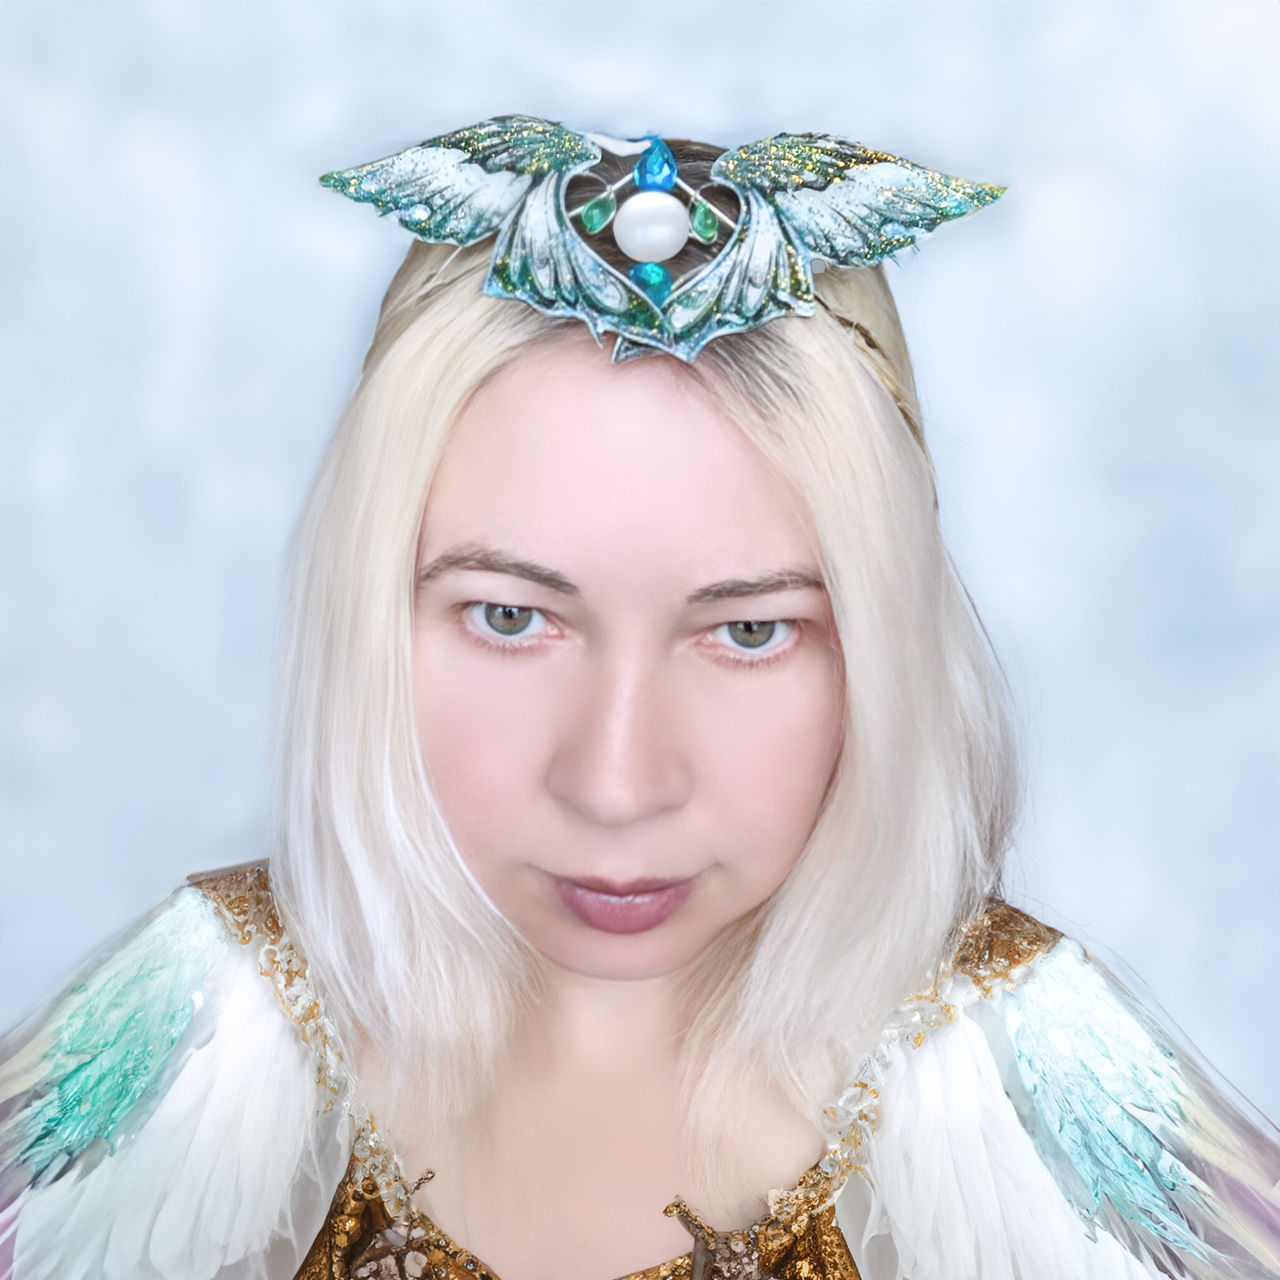 Winged Crown by Lyriel-MoonShadow on DeviantArt